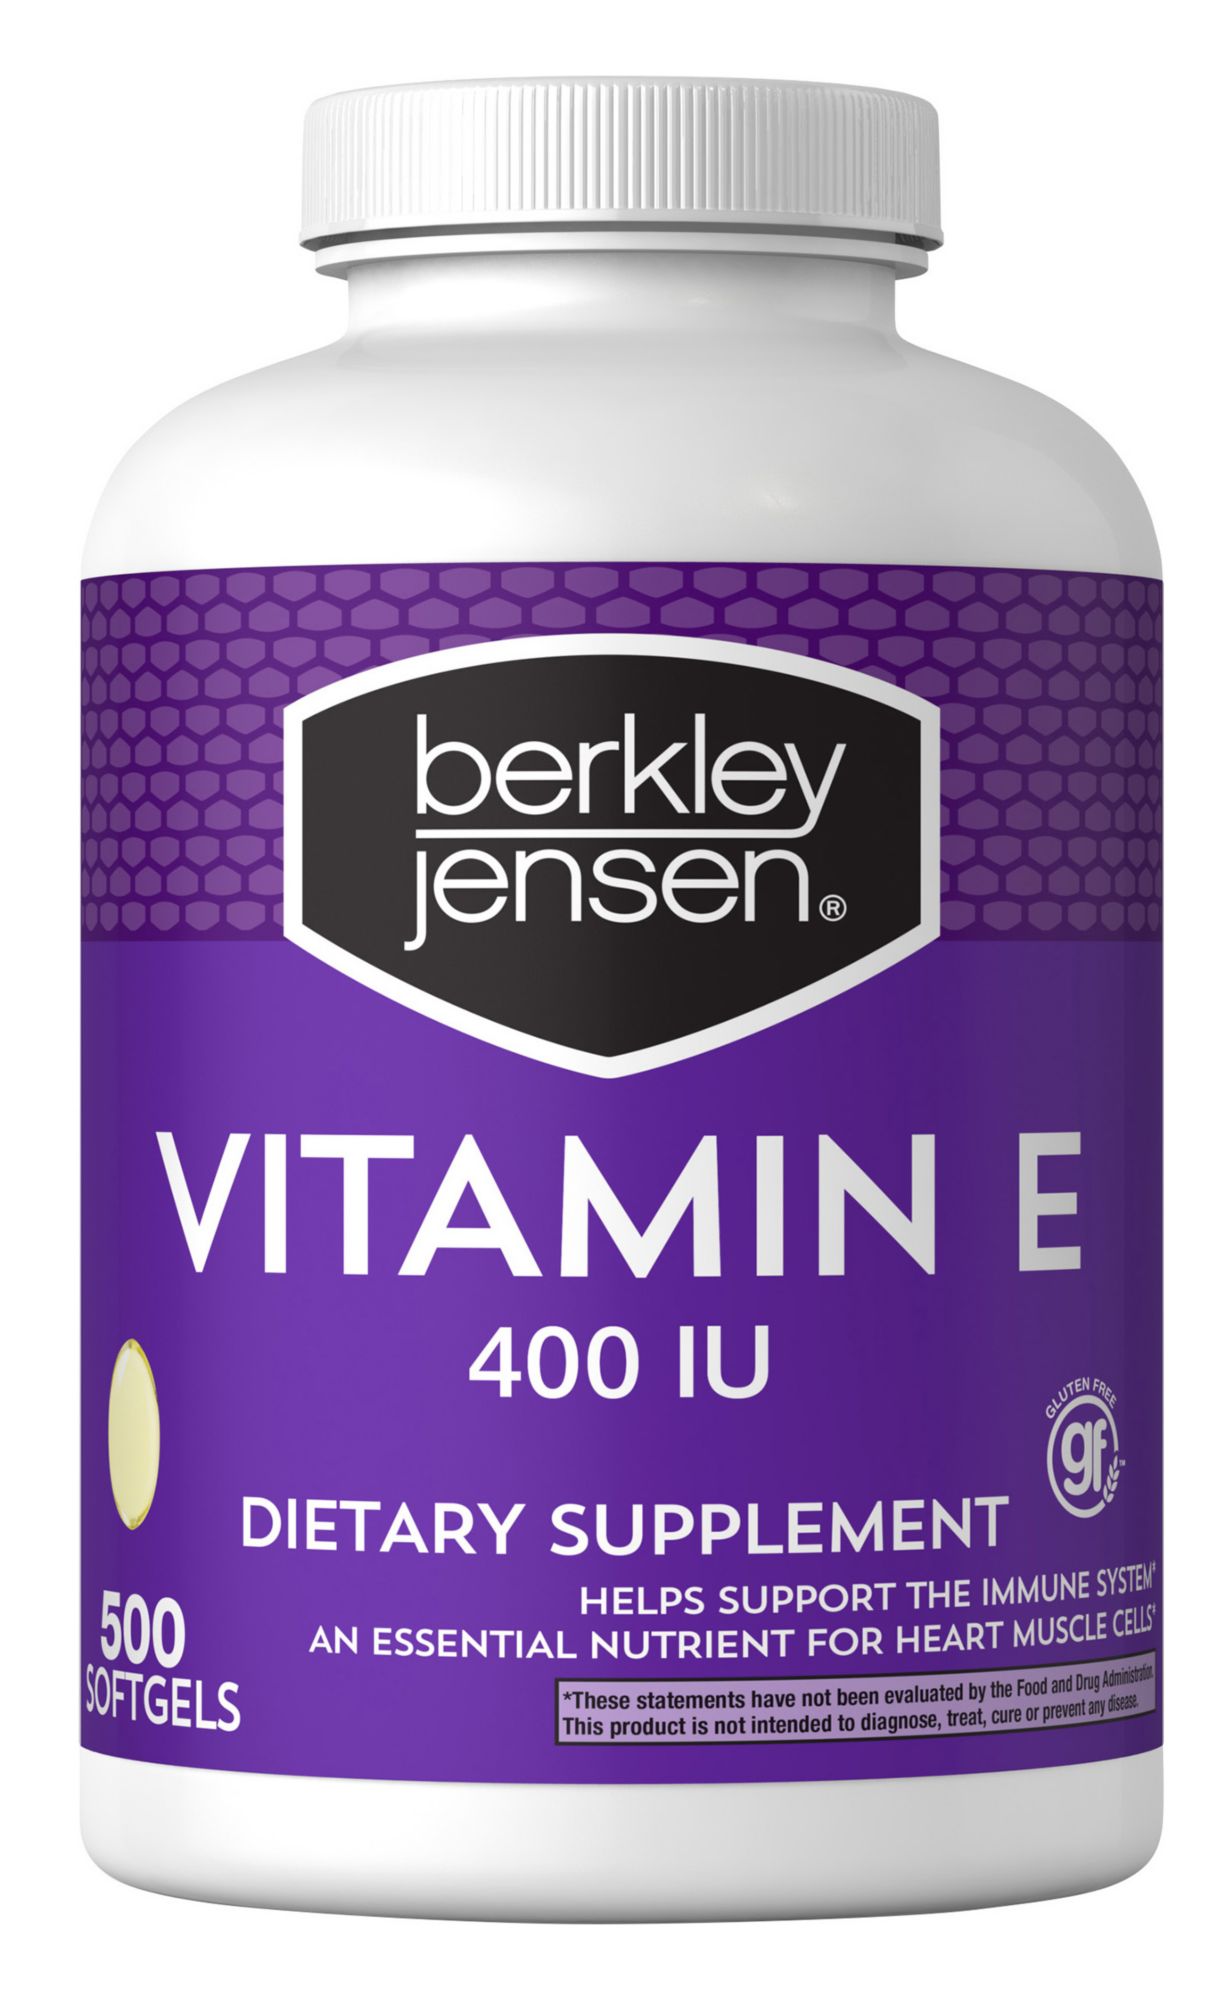 Berkley Jensen 400 Iu Vitamin E Supplement 500 Ct